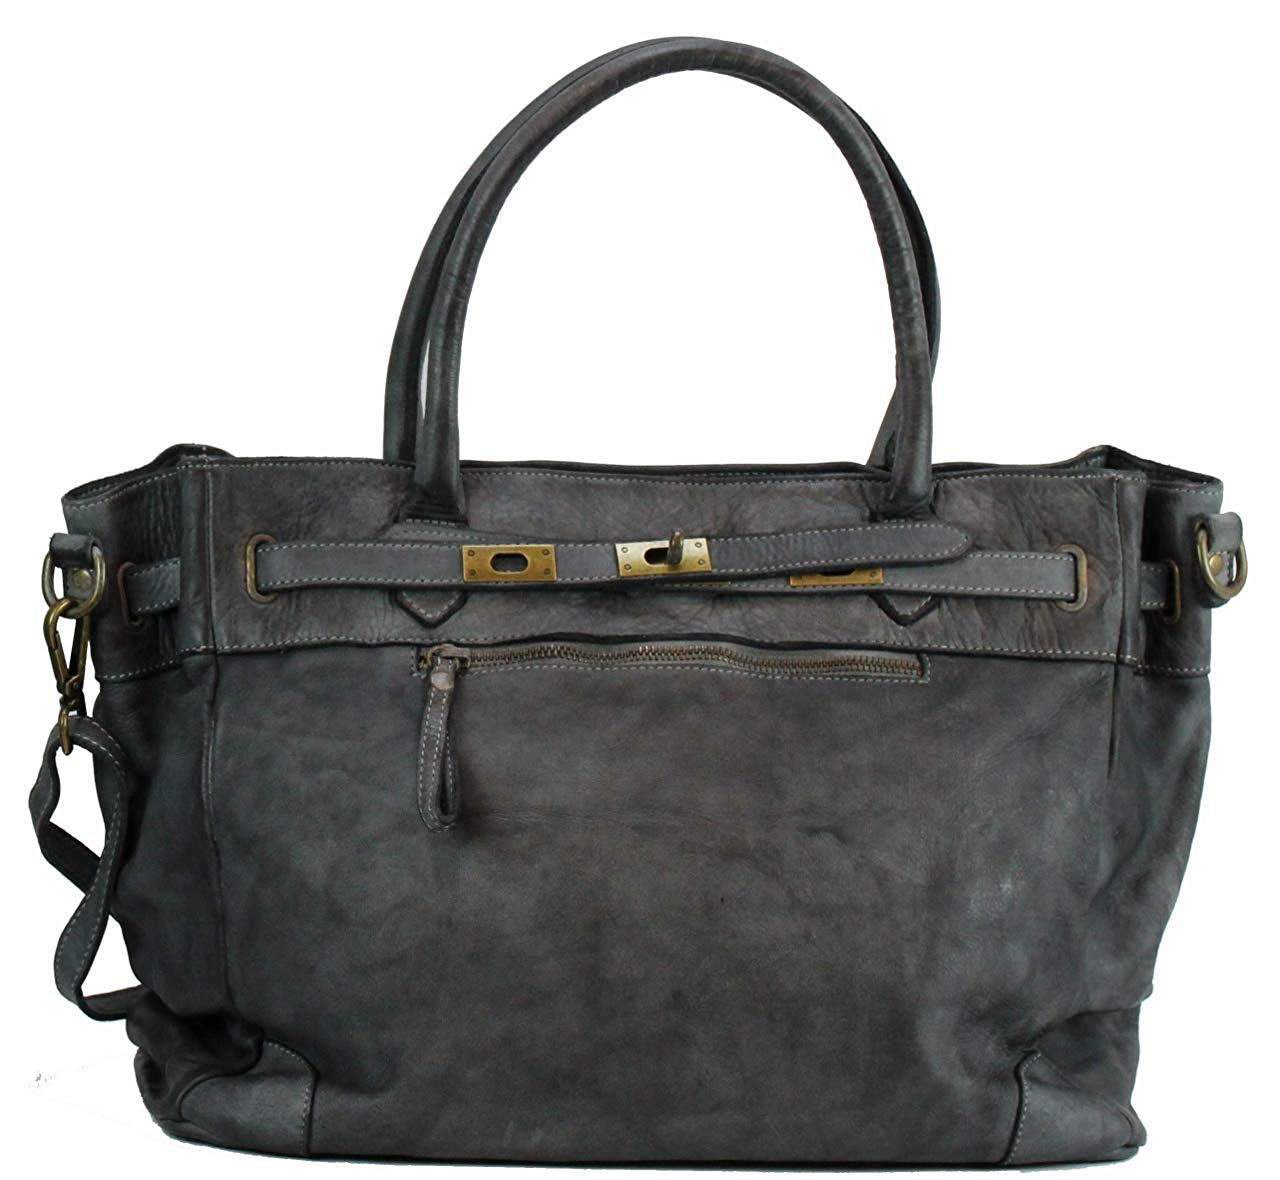 BZNA Bag Mila Taupe vintage Italy Designer Business Damen Handtasche Ledertasche Schultertasche Tasche Leder Shopper Neu